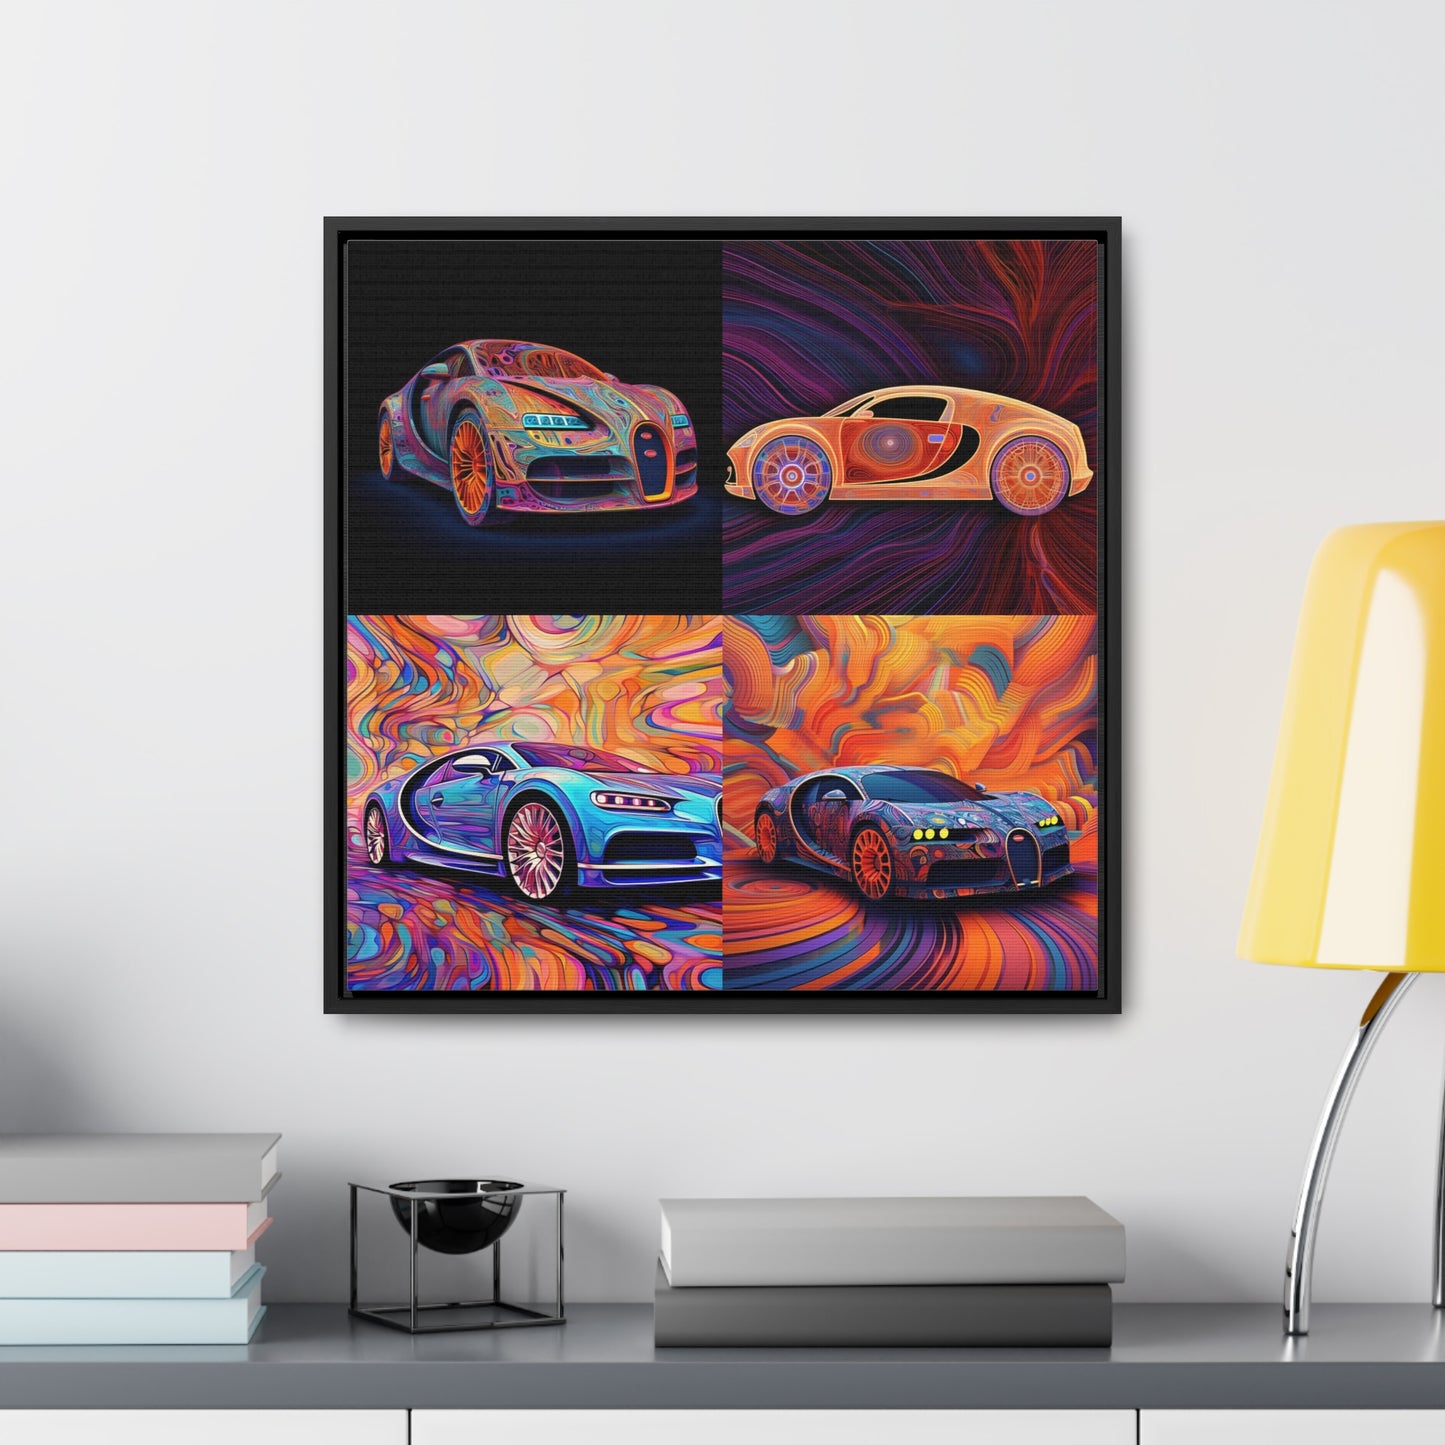 Gallery Canvas Wraps, Square Frame Bugatti Abstract Concept 5